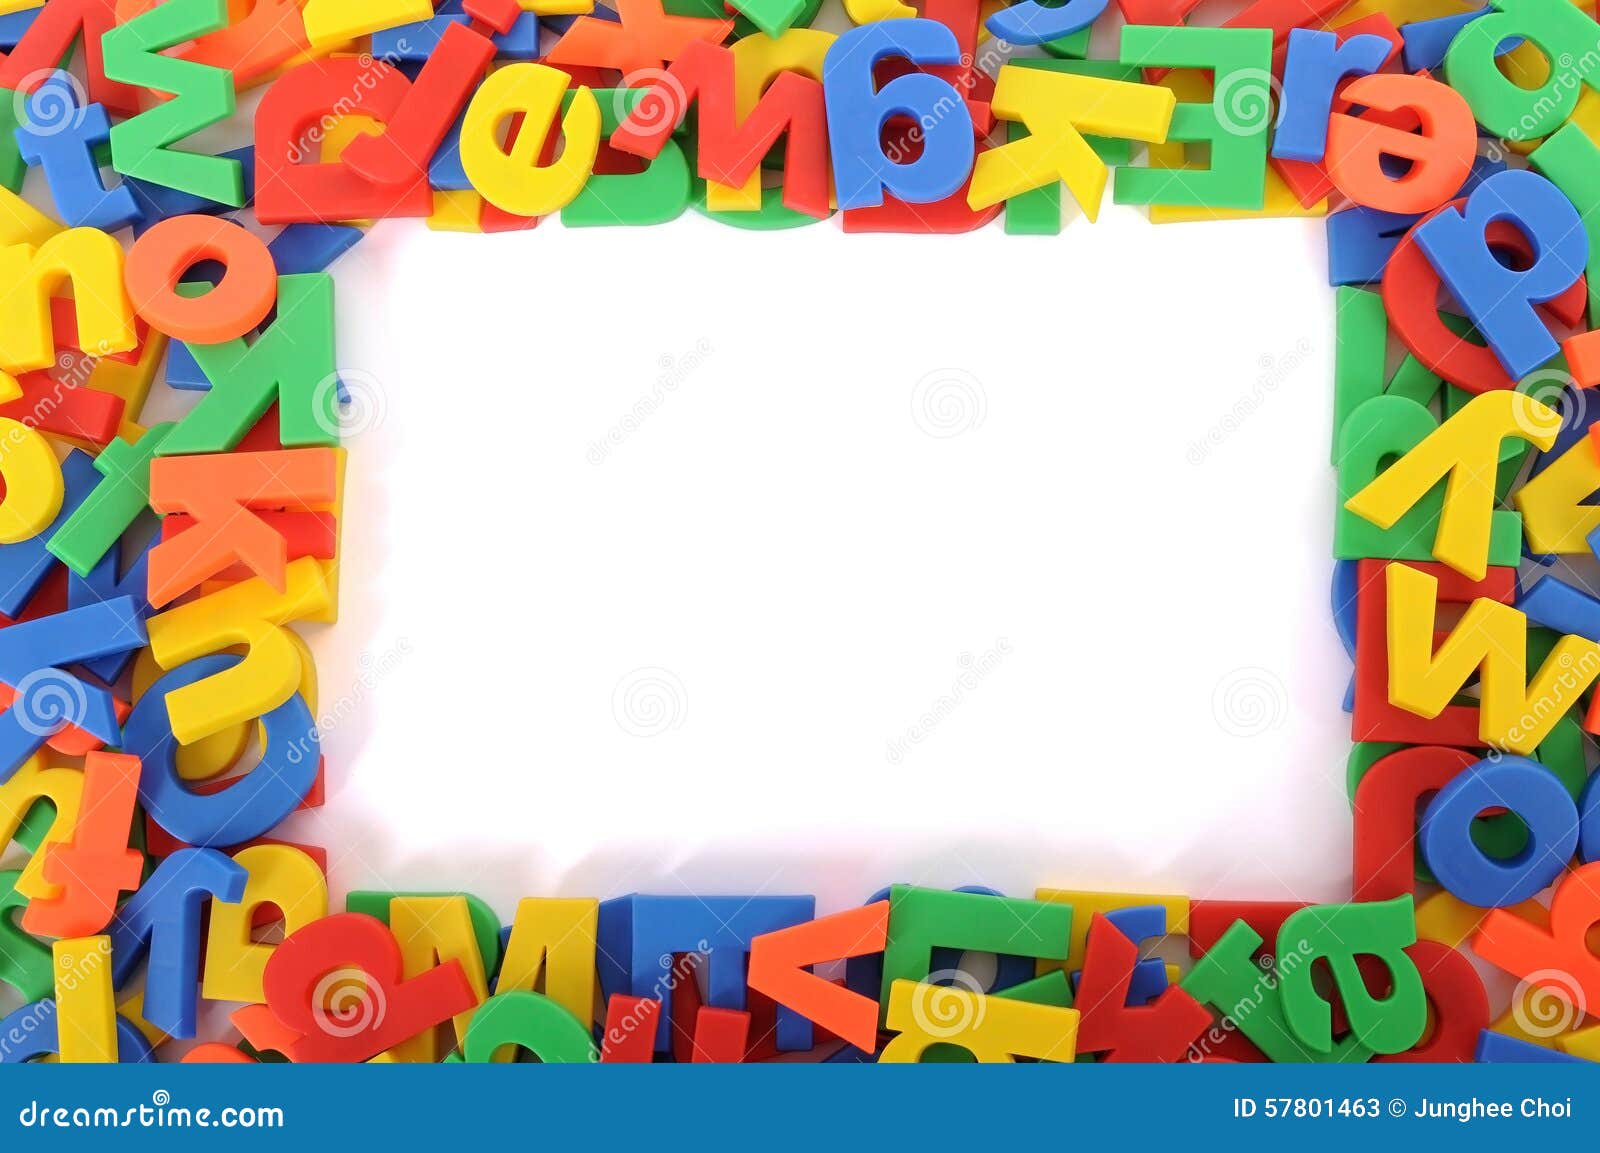 Plastic School Toy, ABC Letters Of Alphabet, Background Border Frame ...